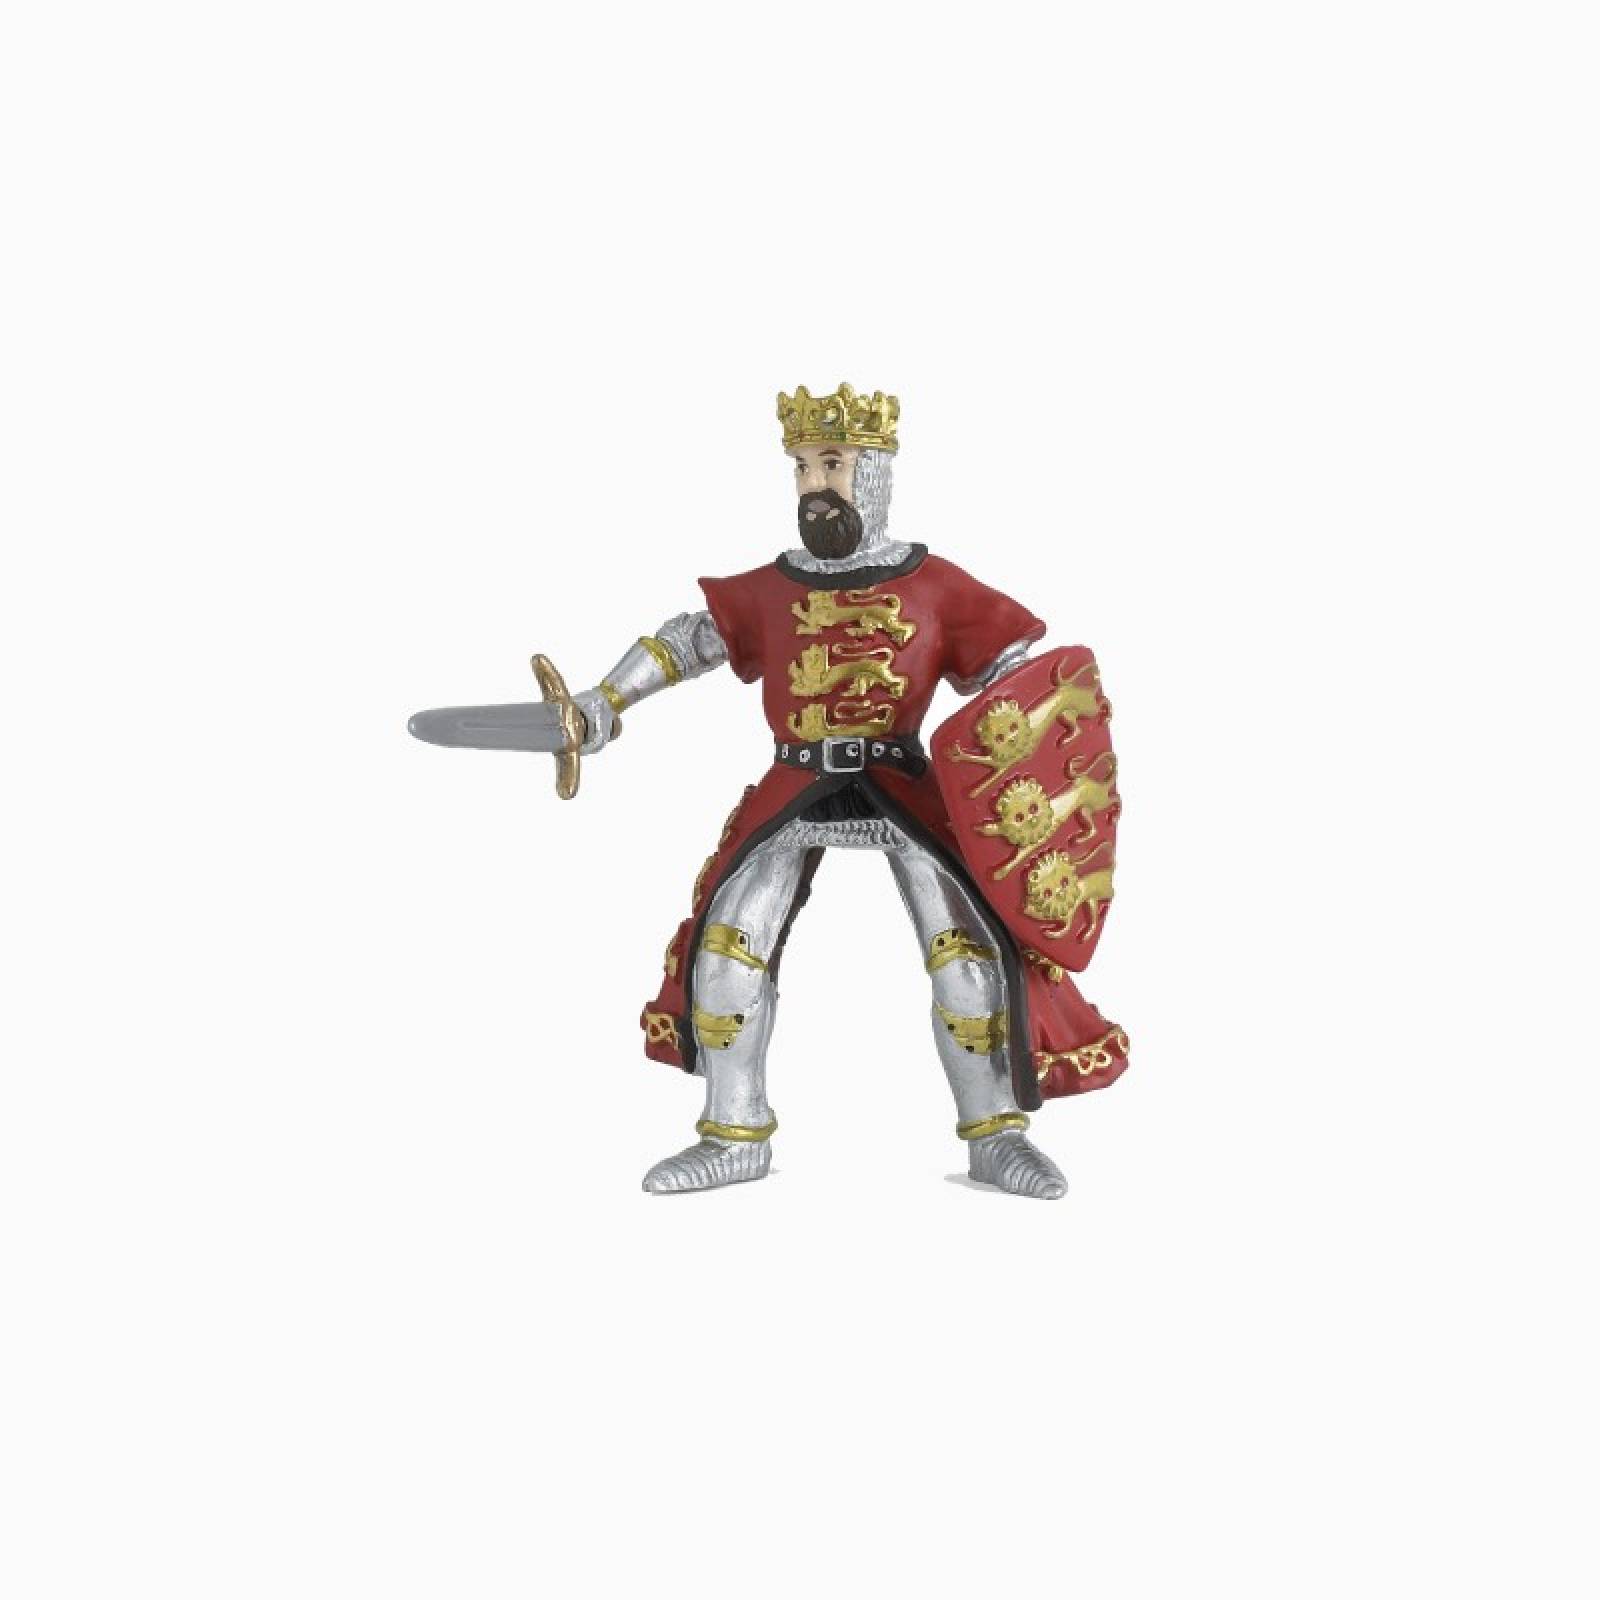 Red King Richard - Papo Fantasy Figure